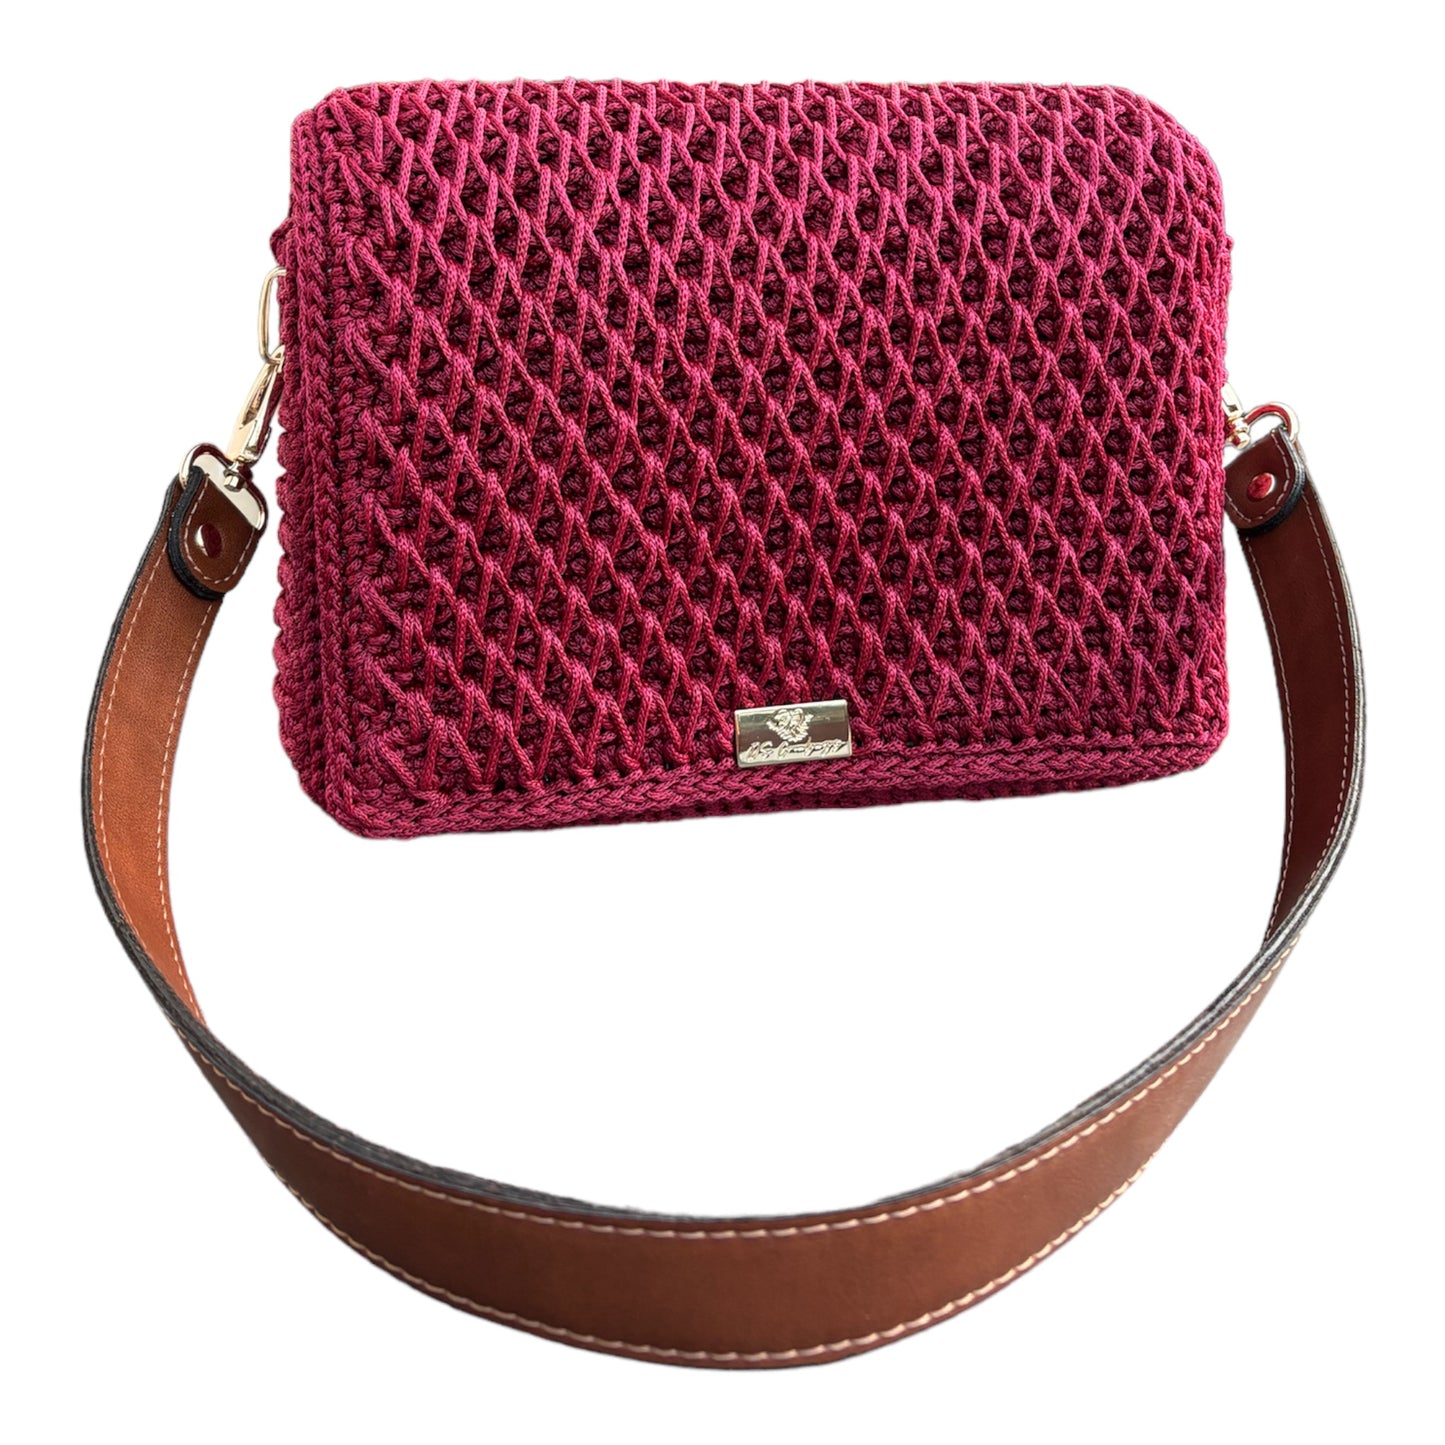 Glamorous burgundy shoulder handbag